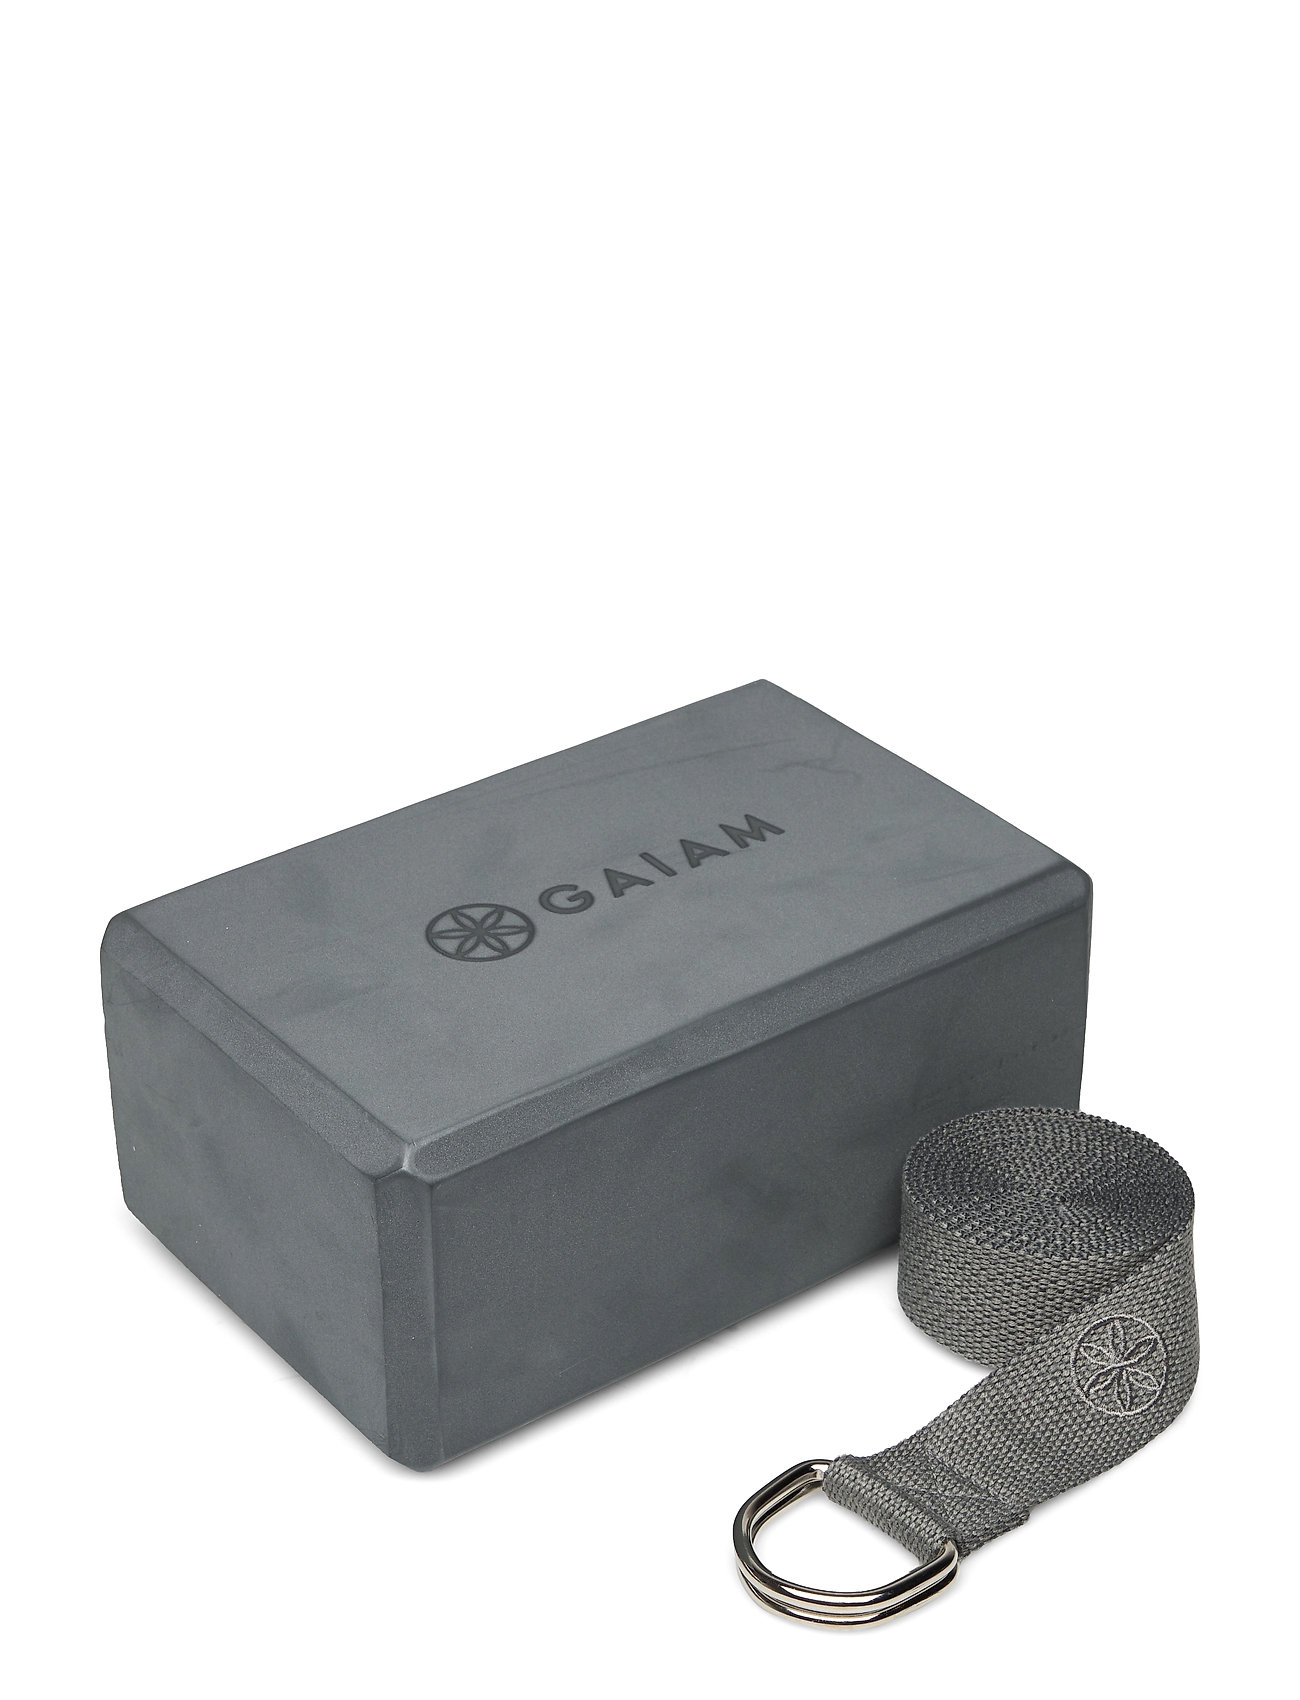 Gaiam Block-Strap Combo Grey Accessories Sports Equipment Yoga Equipment Yoga Blocks And Straps Harmaa Gaiam